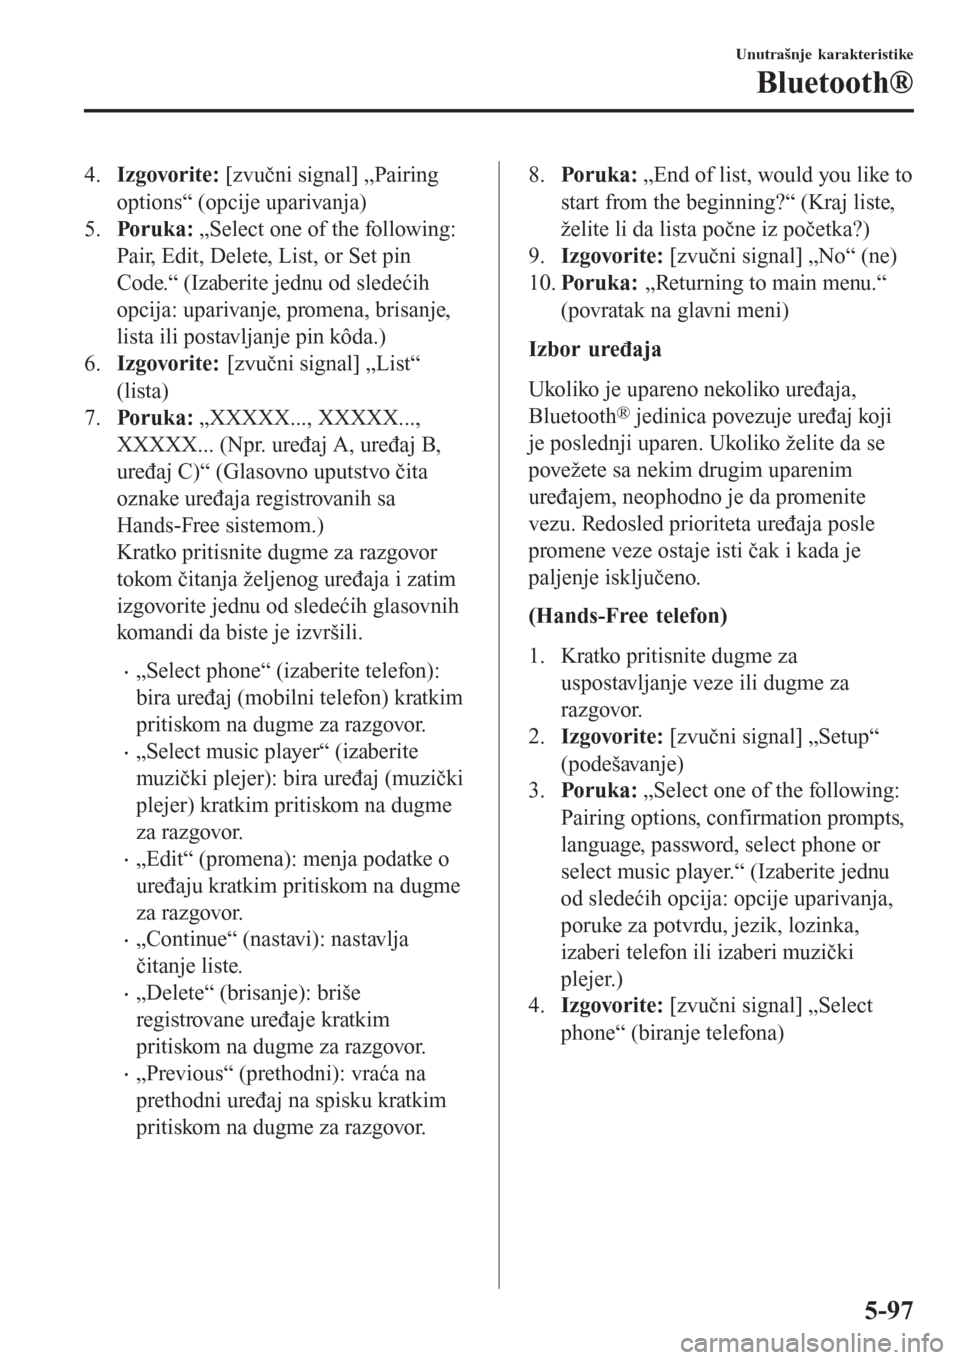 MAZDA MODEL 3 HATCHBACK 2015  Korisničko uputstvo (in Serbian) 4.Izgovorite: [zvučni signal] „Pairing
options“ (opcije uparivanja)
5.Po r uk a : „Select one of the following:
Pair, Edit, Delete, List, or Set pin
Code.“ (Izaberite jednu od sledećih
opcij